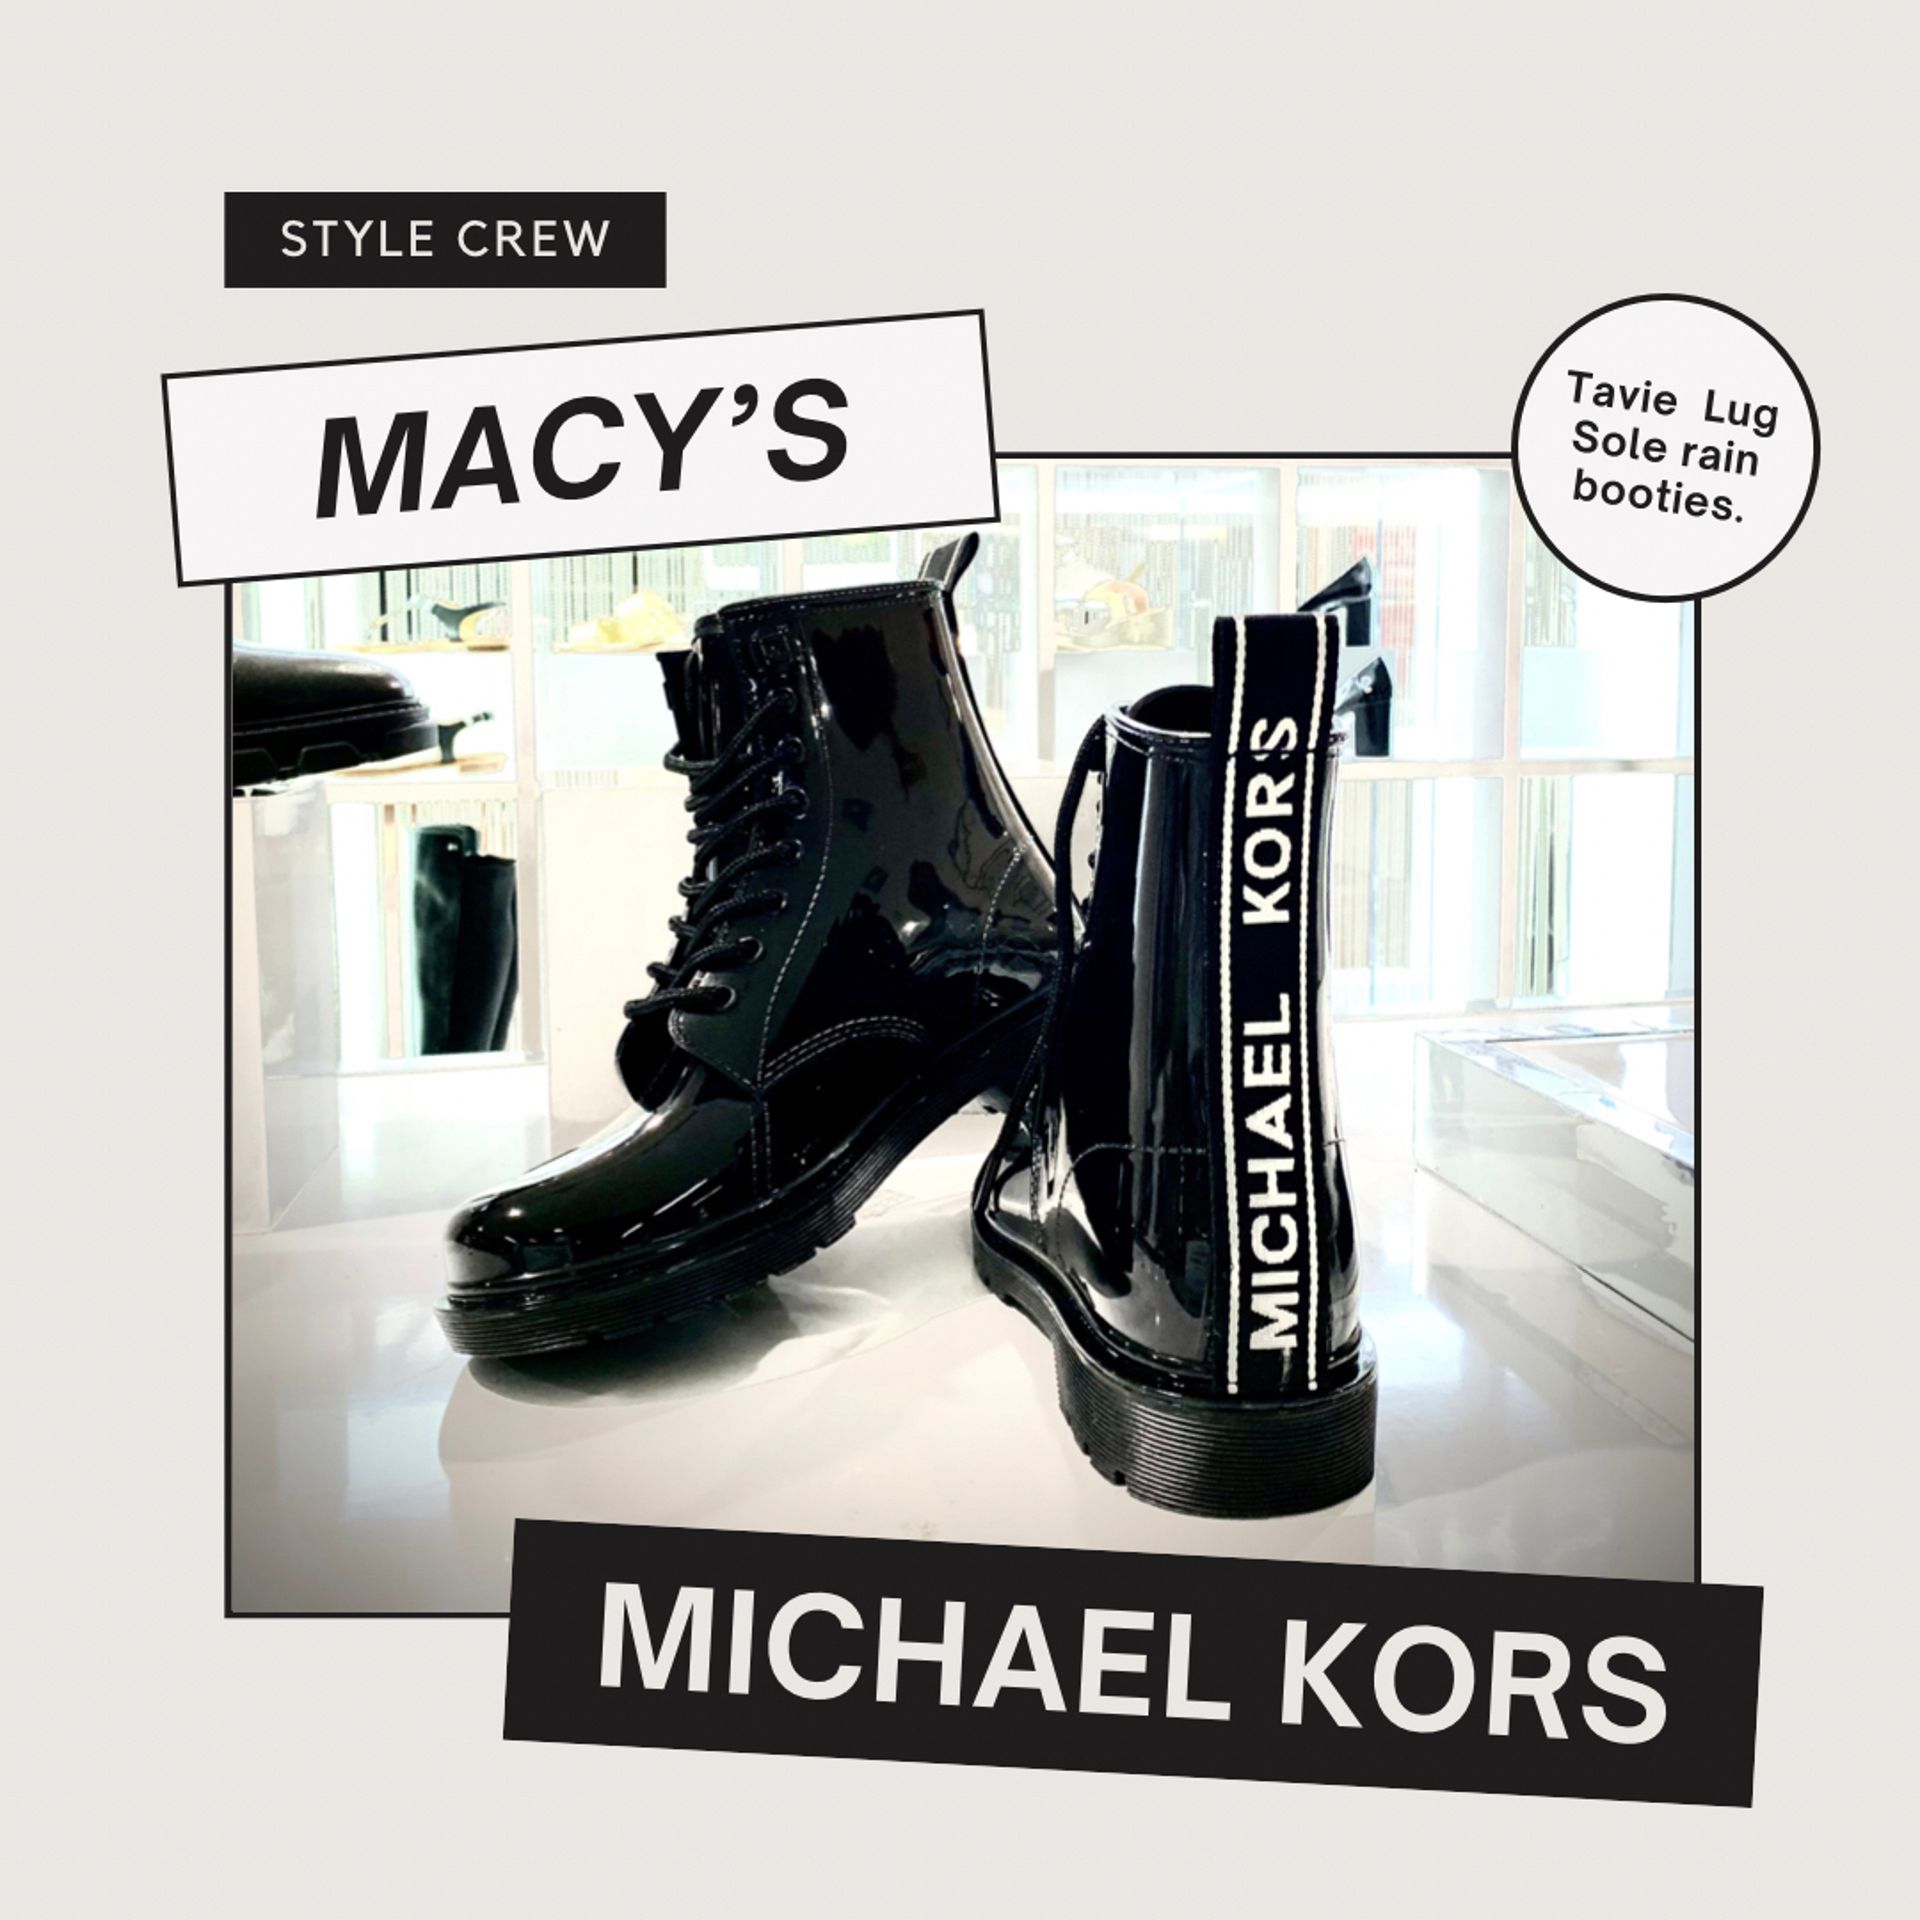 Michael Kors Booties - Macys Style Crew